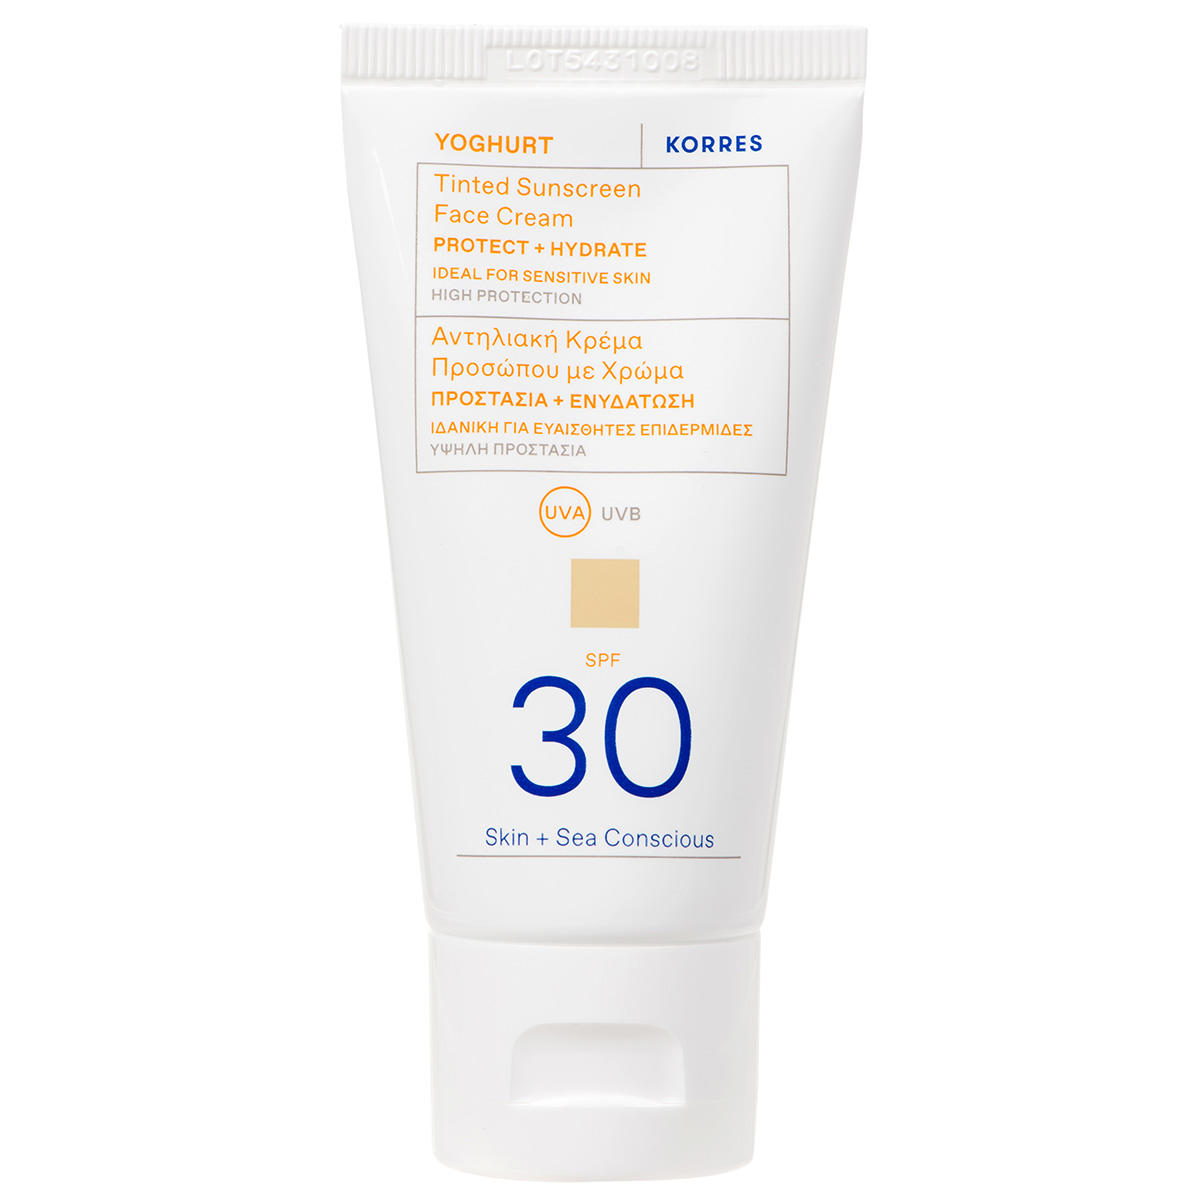 KORRES Yoghurt Tinted Sunscreen Face Cream SPF 30 50 ml - 1